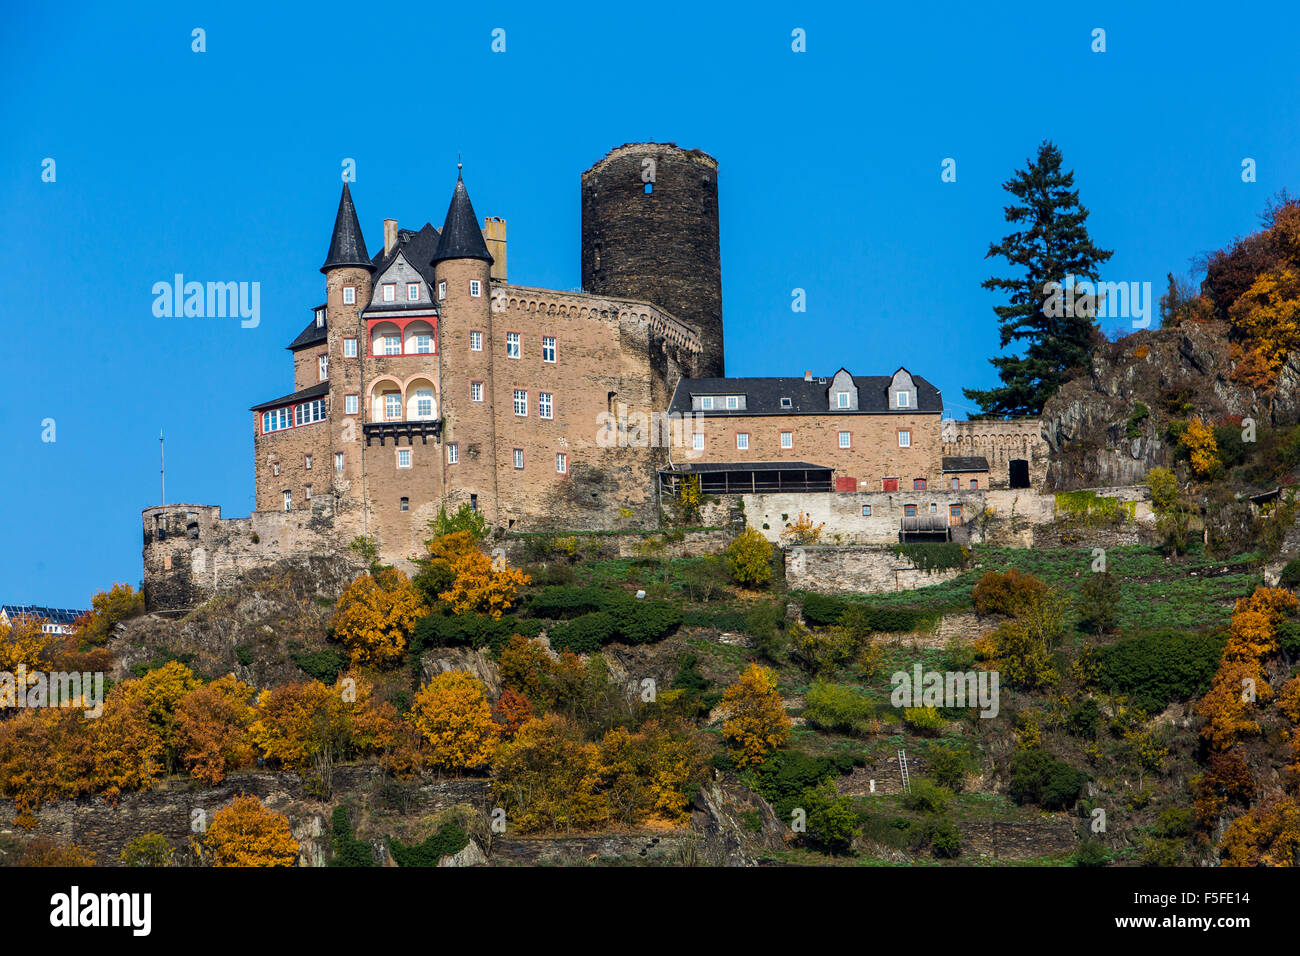 Burg Katz castle, above St. Goarshausen, Rheingau, Upper Middle Rhine Valley, Germany Stock Photo